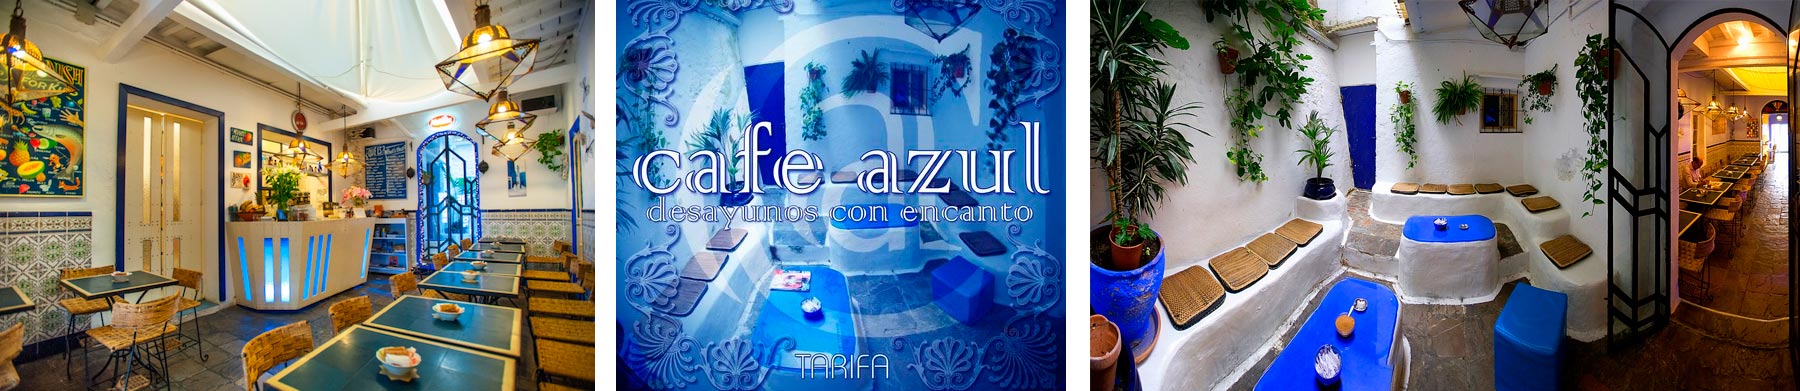 Cafe azul Tarifa